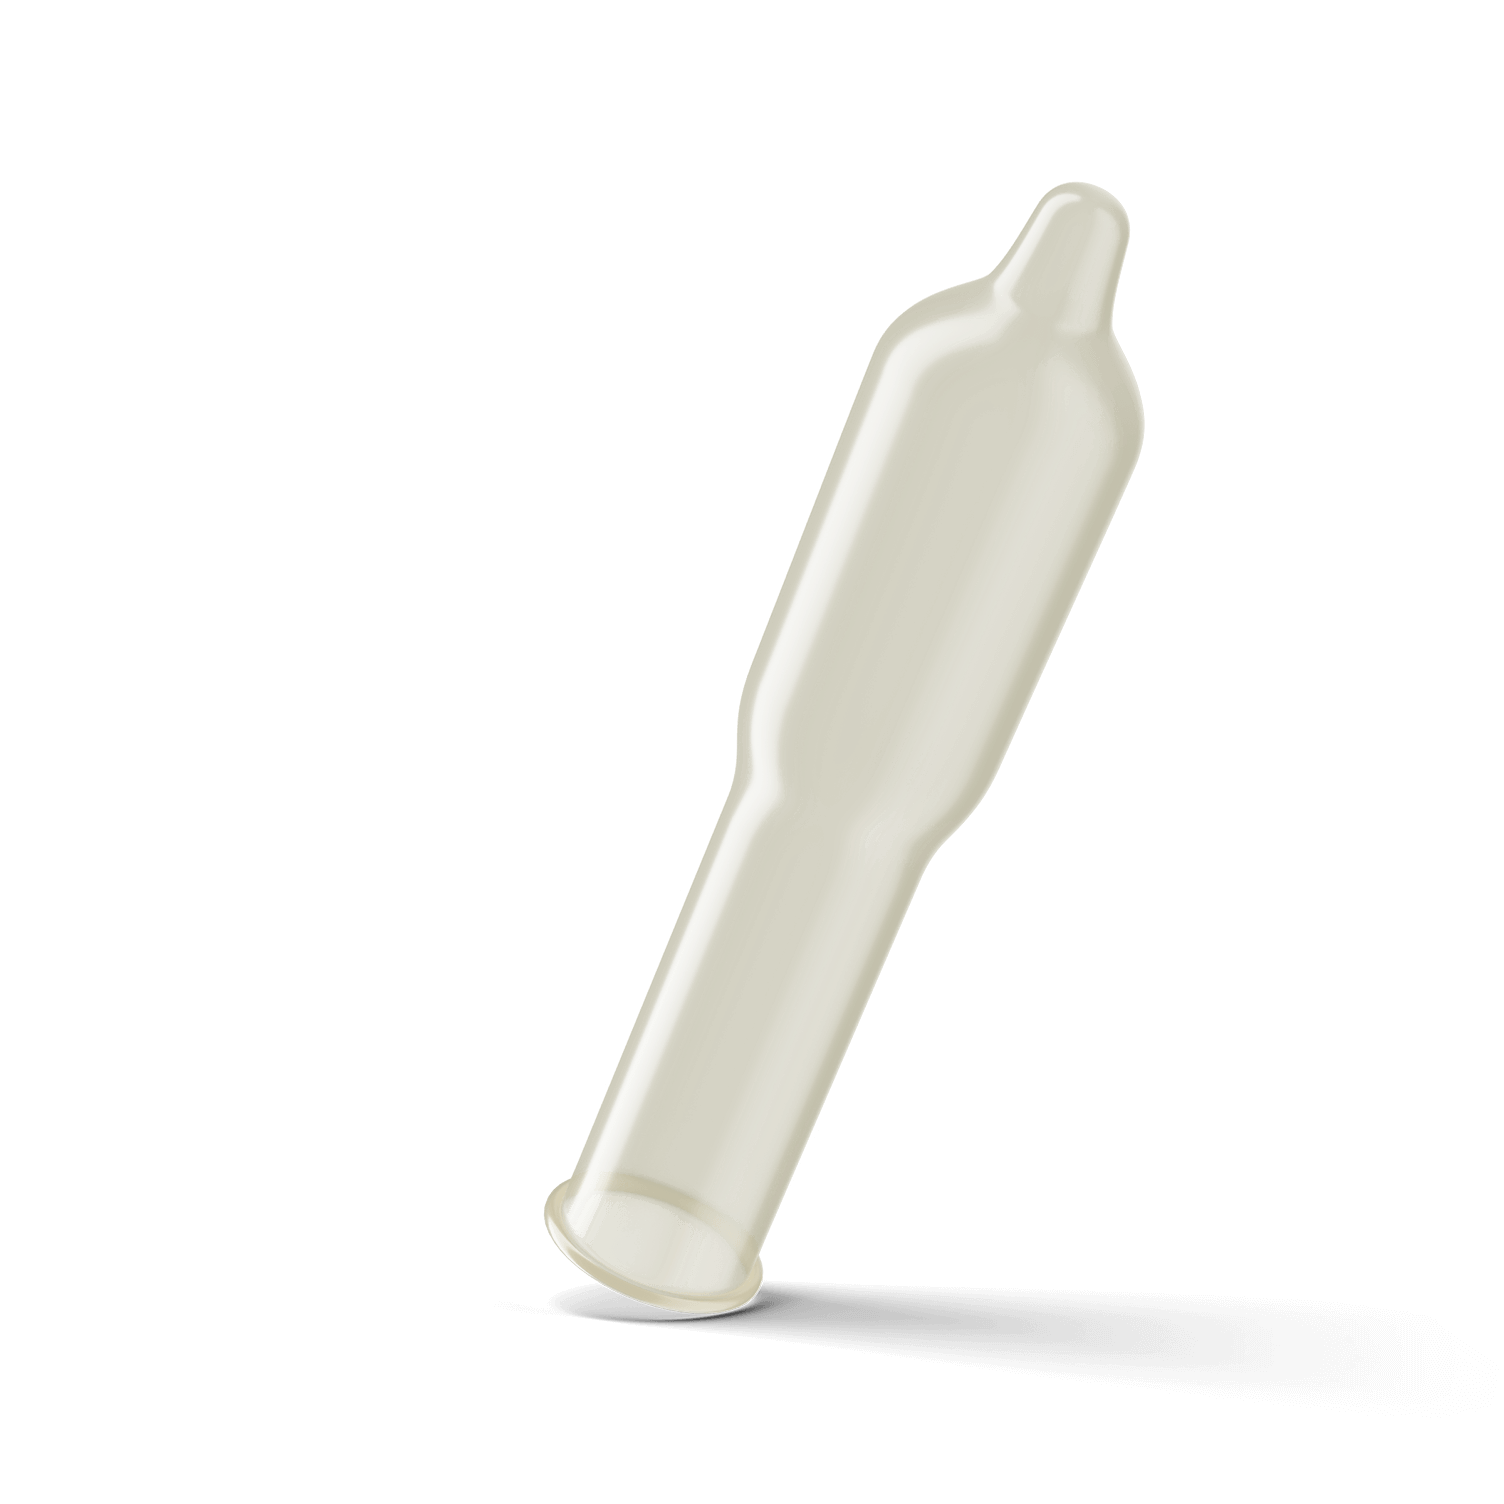 Trojan Ultra Fit Freedom Feel Condom bulbous shape.